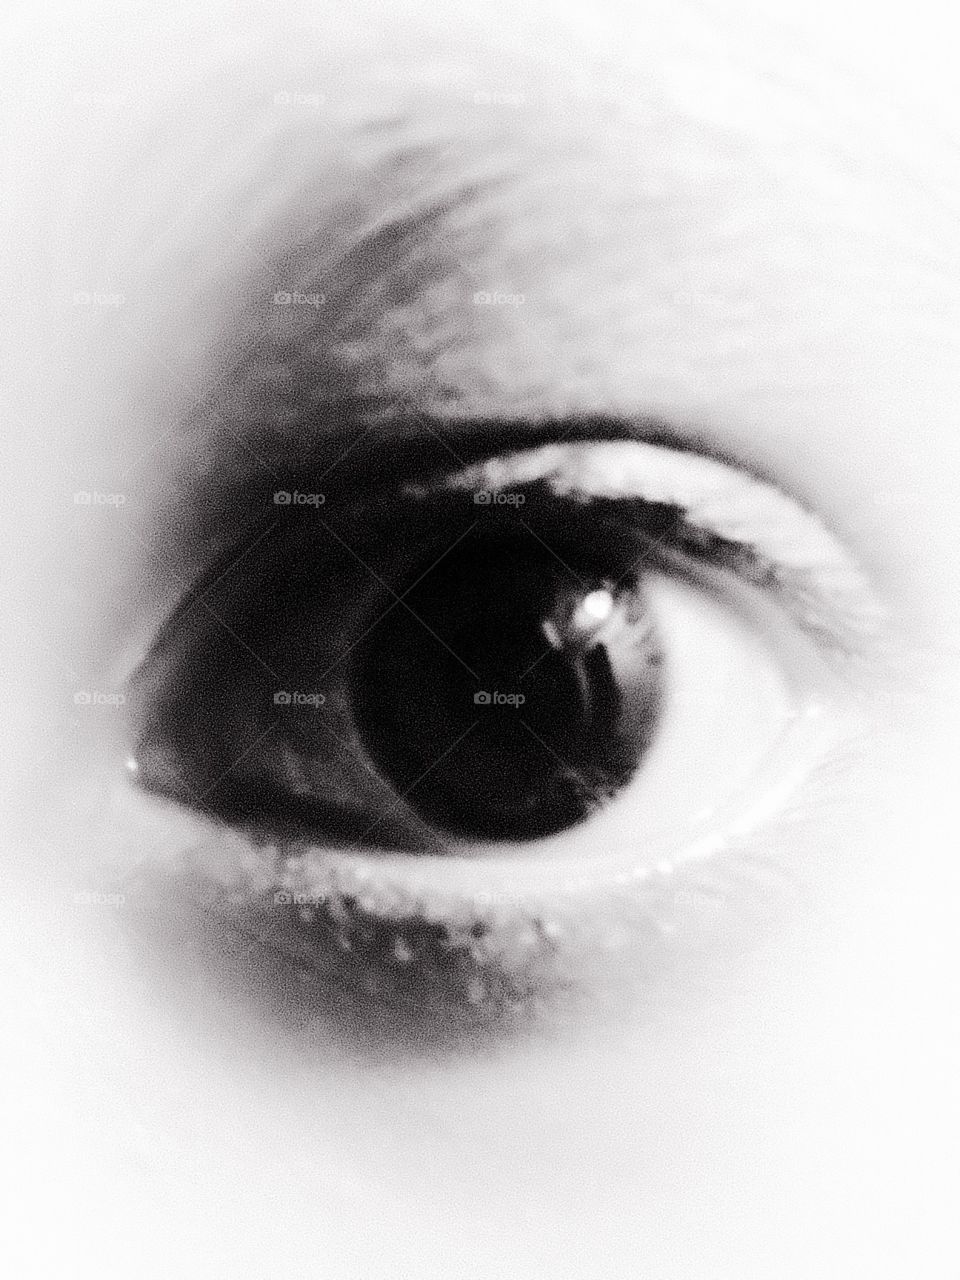 Looking through the eye